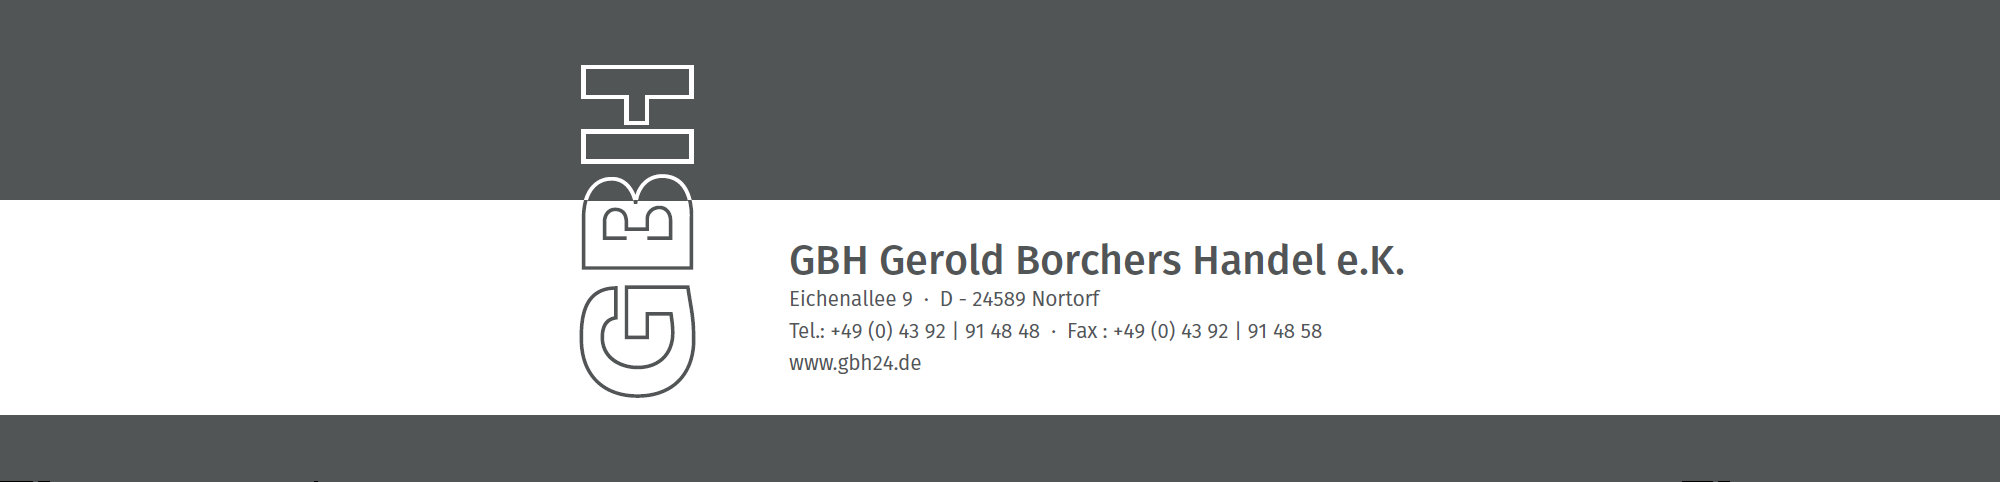 GBH Gerold Borchers Handel e.K.